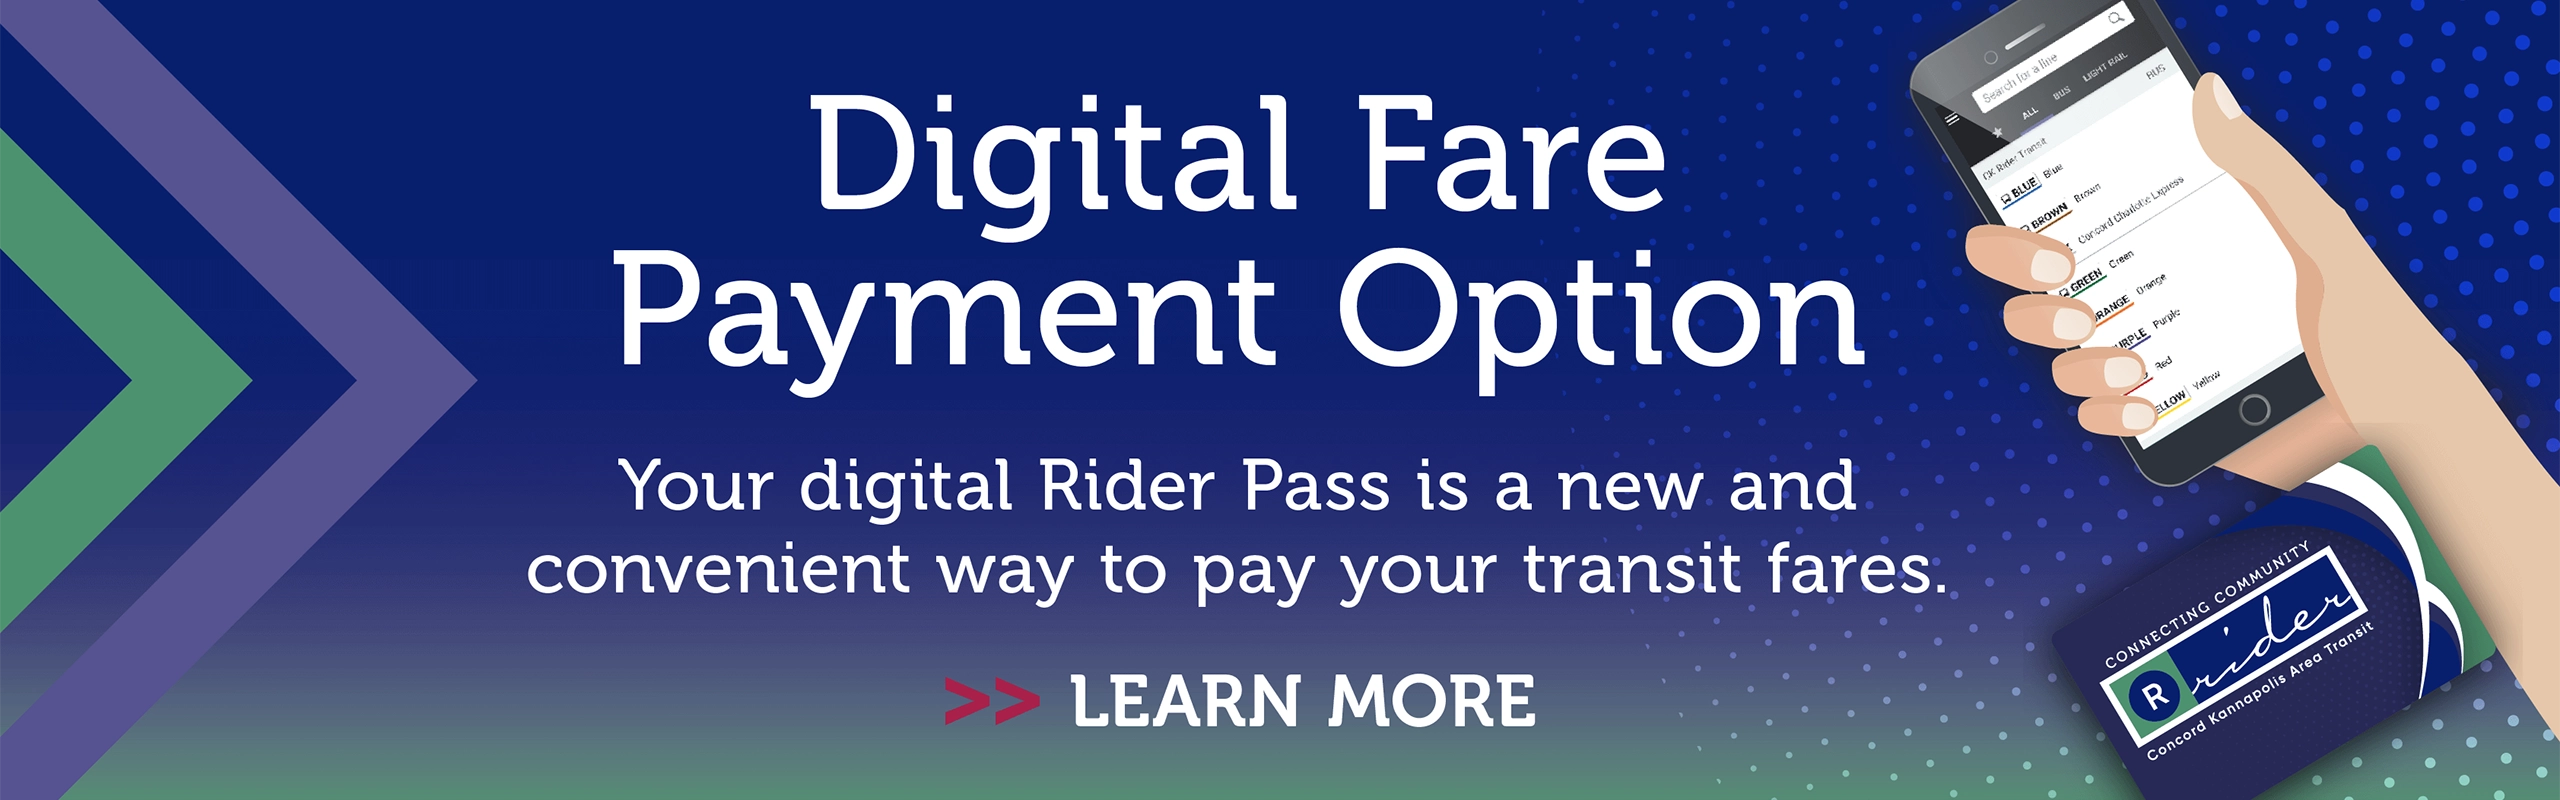 Digital fare payment option banner